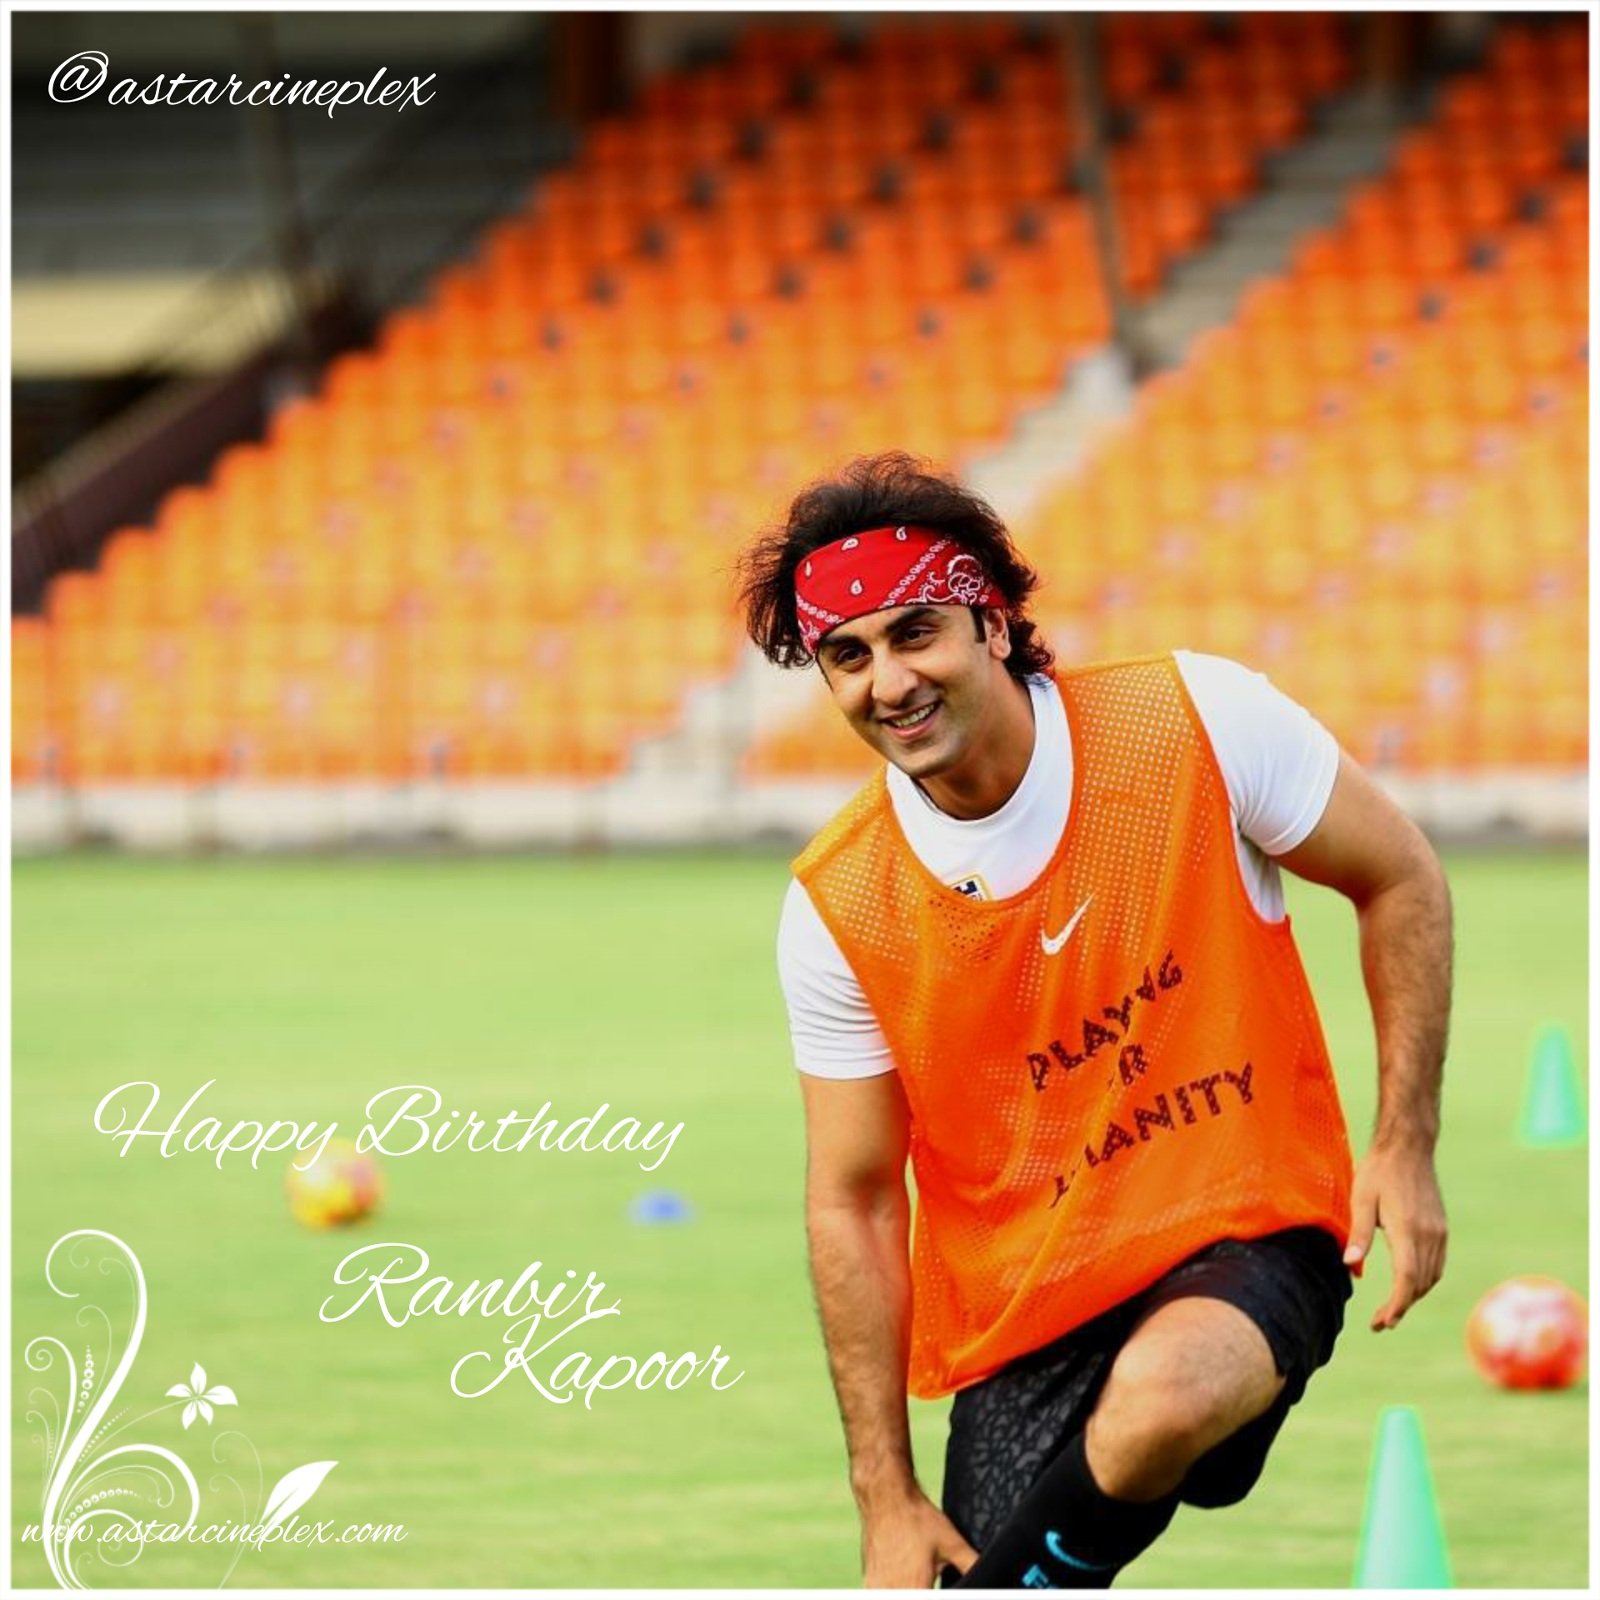 Wish You Very Happy Birthday Rockstar 
Super Star Ranbir Kapoor   Stay Always Happy  